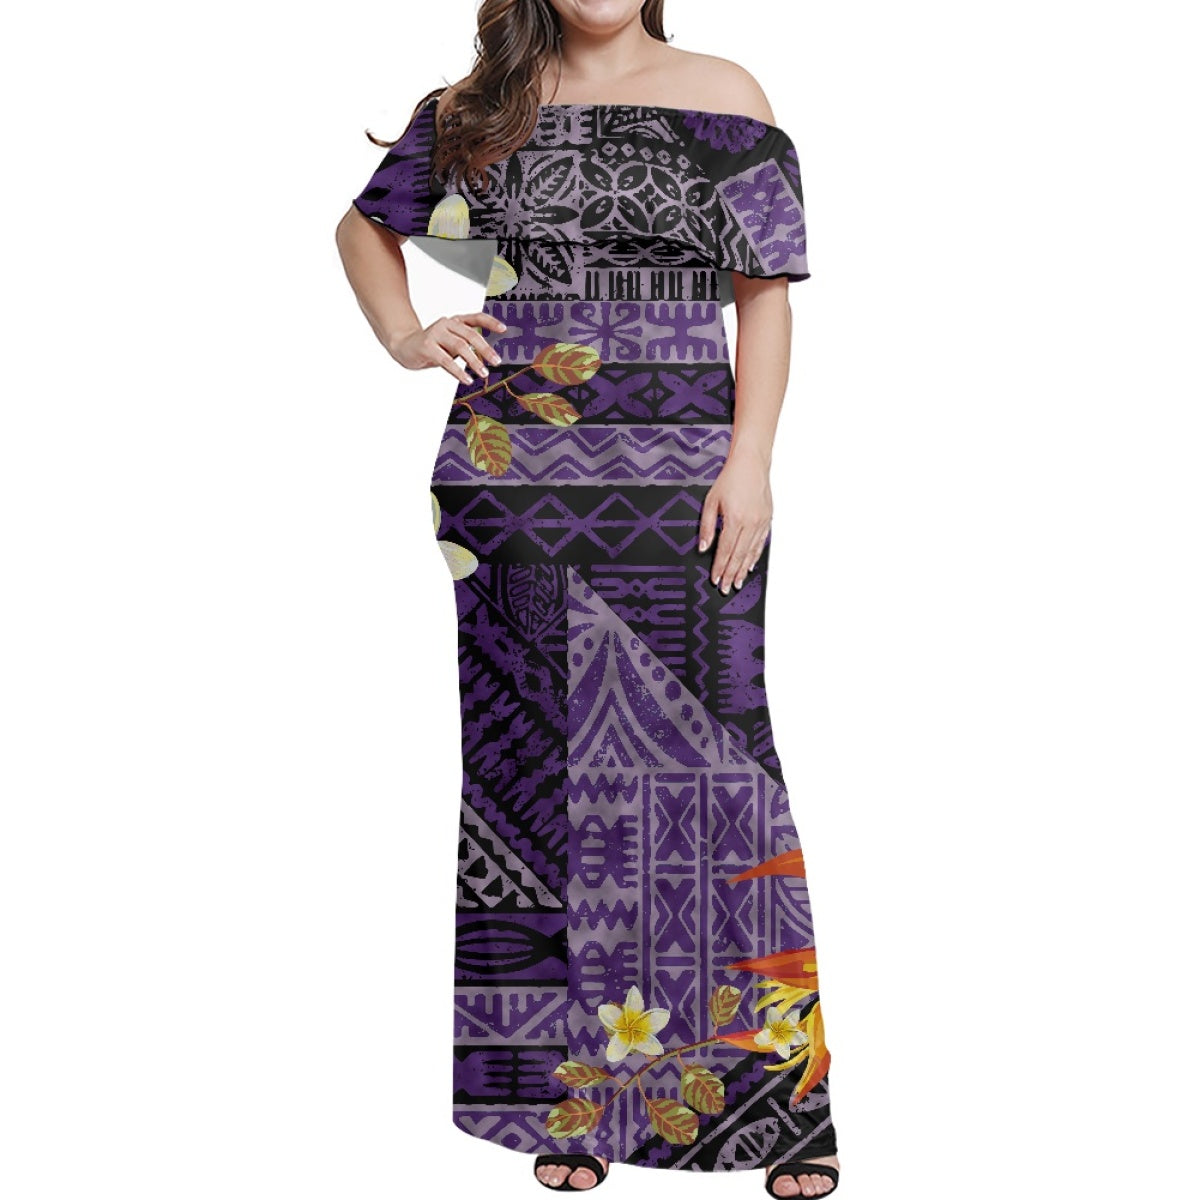 Island Polynesian Tribal Casual Dresses Lady Elegant Plus Size Women's Dresses Summer Plumeria Party Dresses Women Elegance